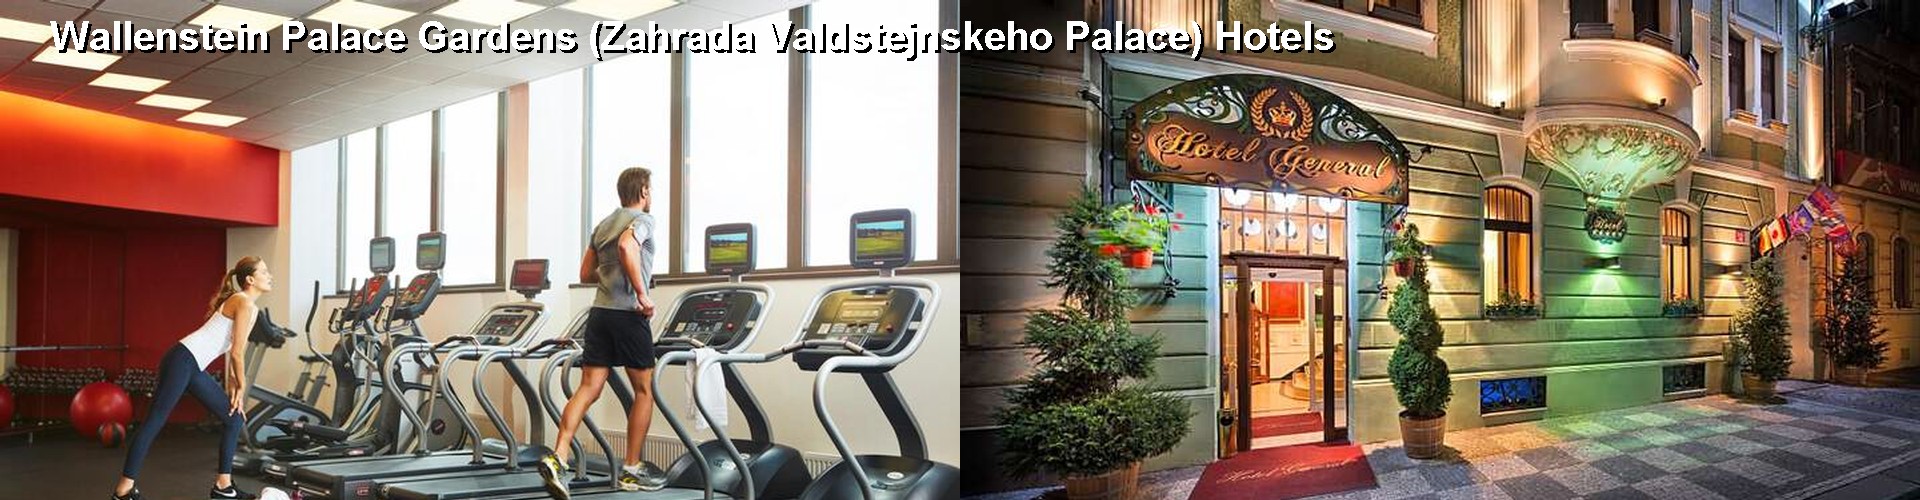 5 Best Hotels near Wallenstein Palace Gardens (Zahrada Valdstejnskeho Palace)